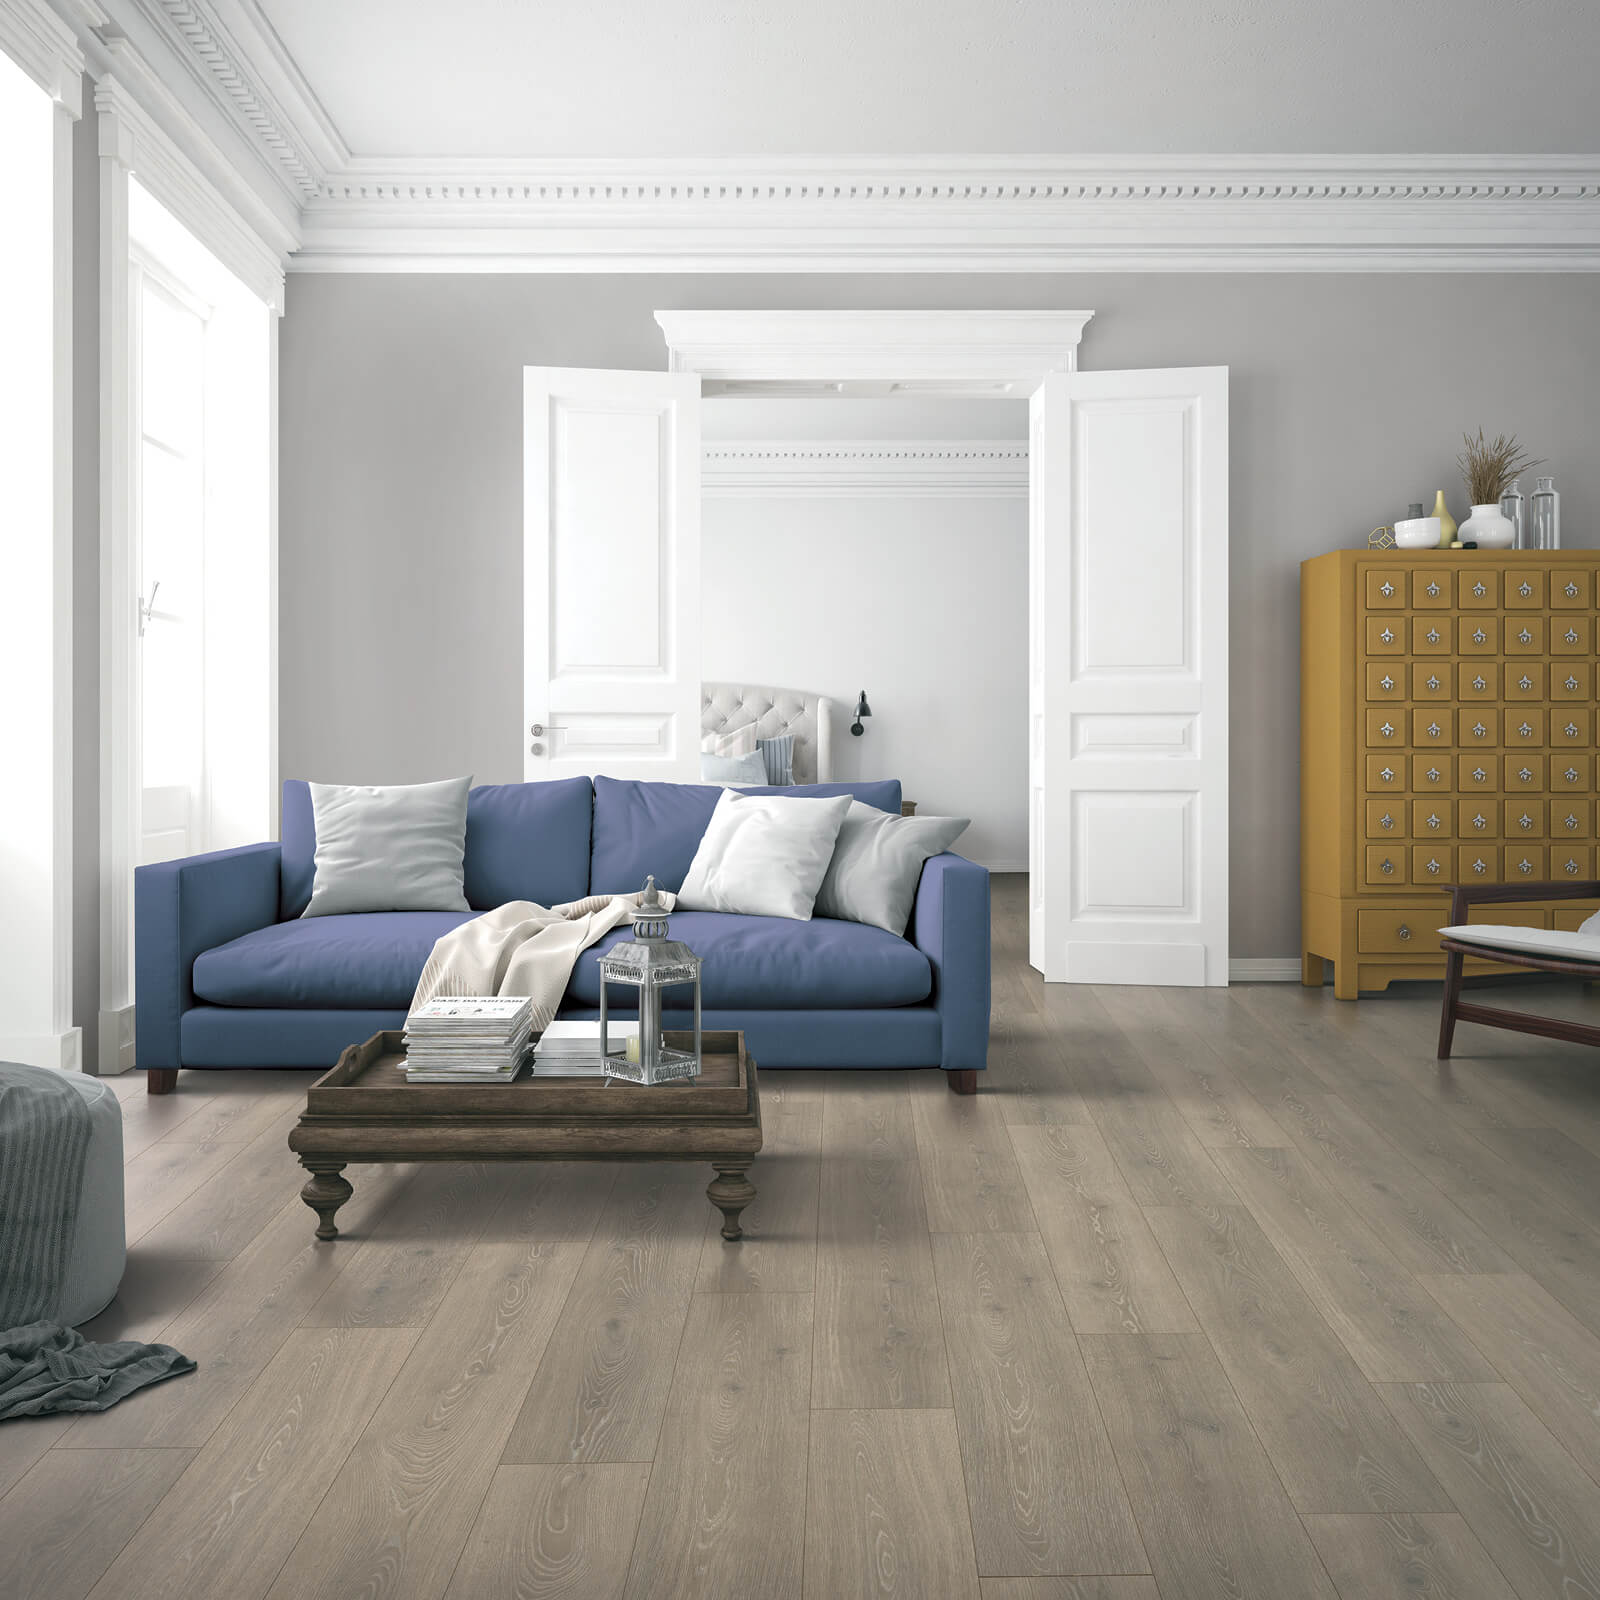 Sofa on laminate flooring | Bixby Knolls Carpet